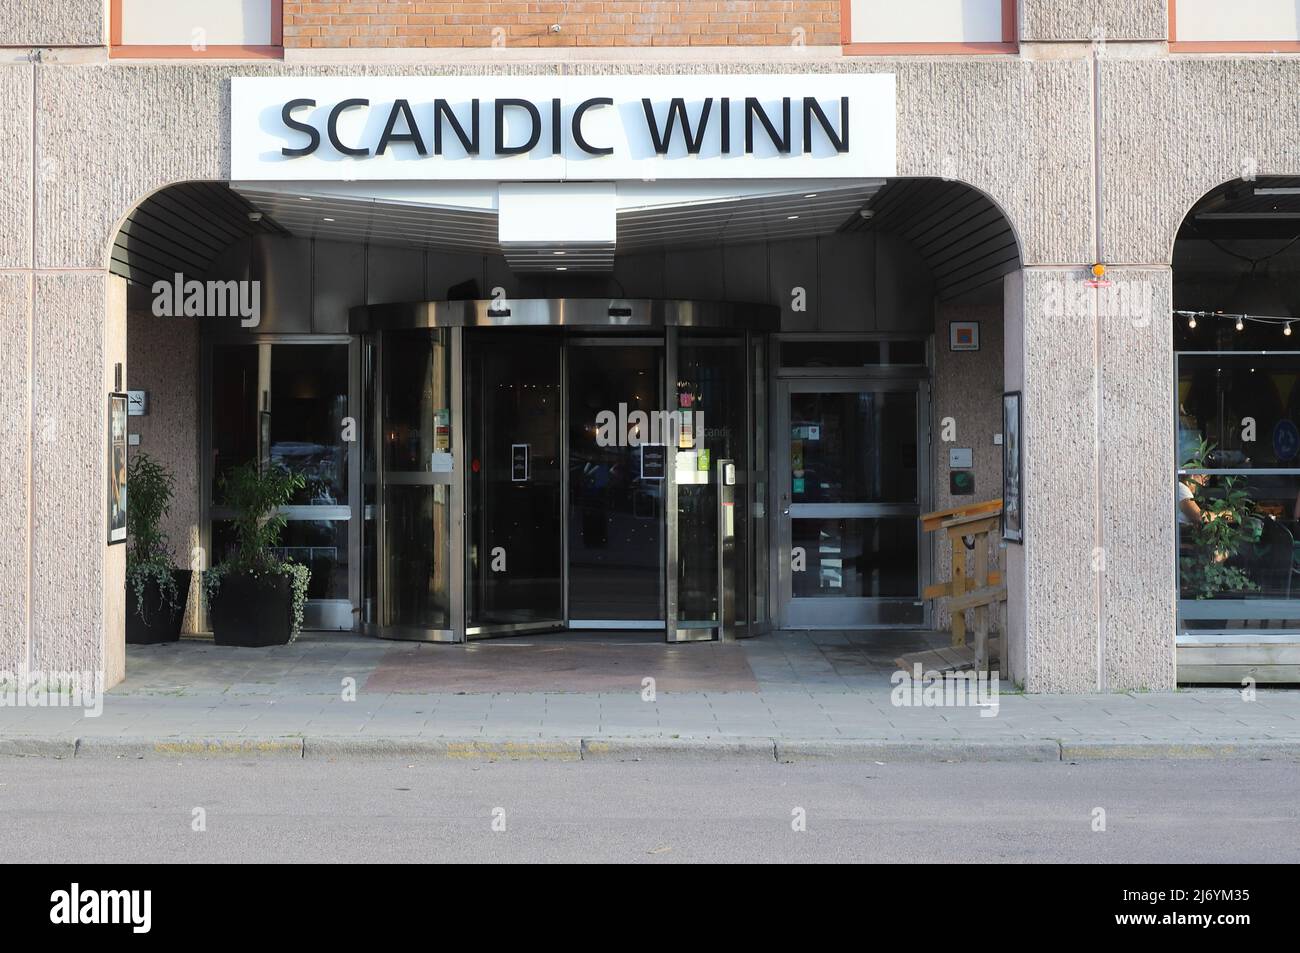 Karlstad, Sweden - July 8, 2021: Entrance to the Scandic Winn hotel in Karlstad. Stock Photo